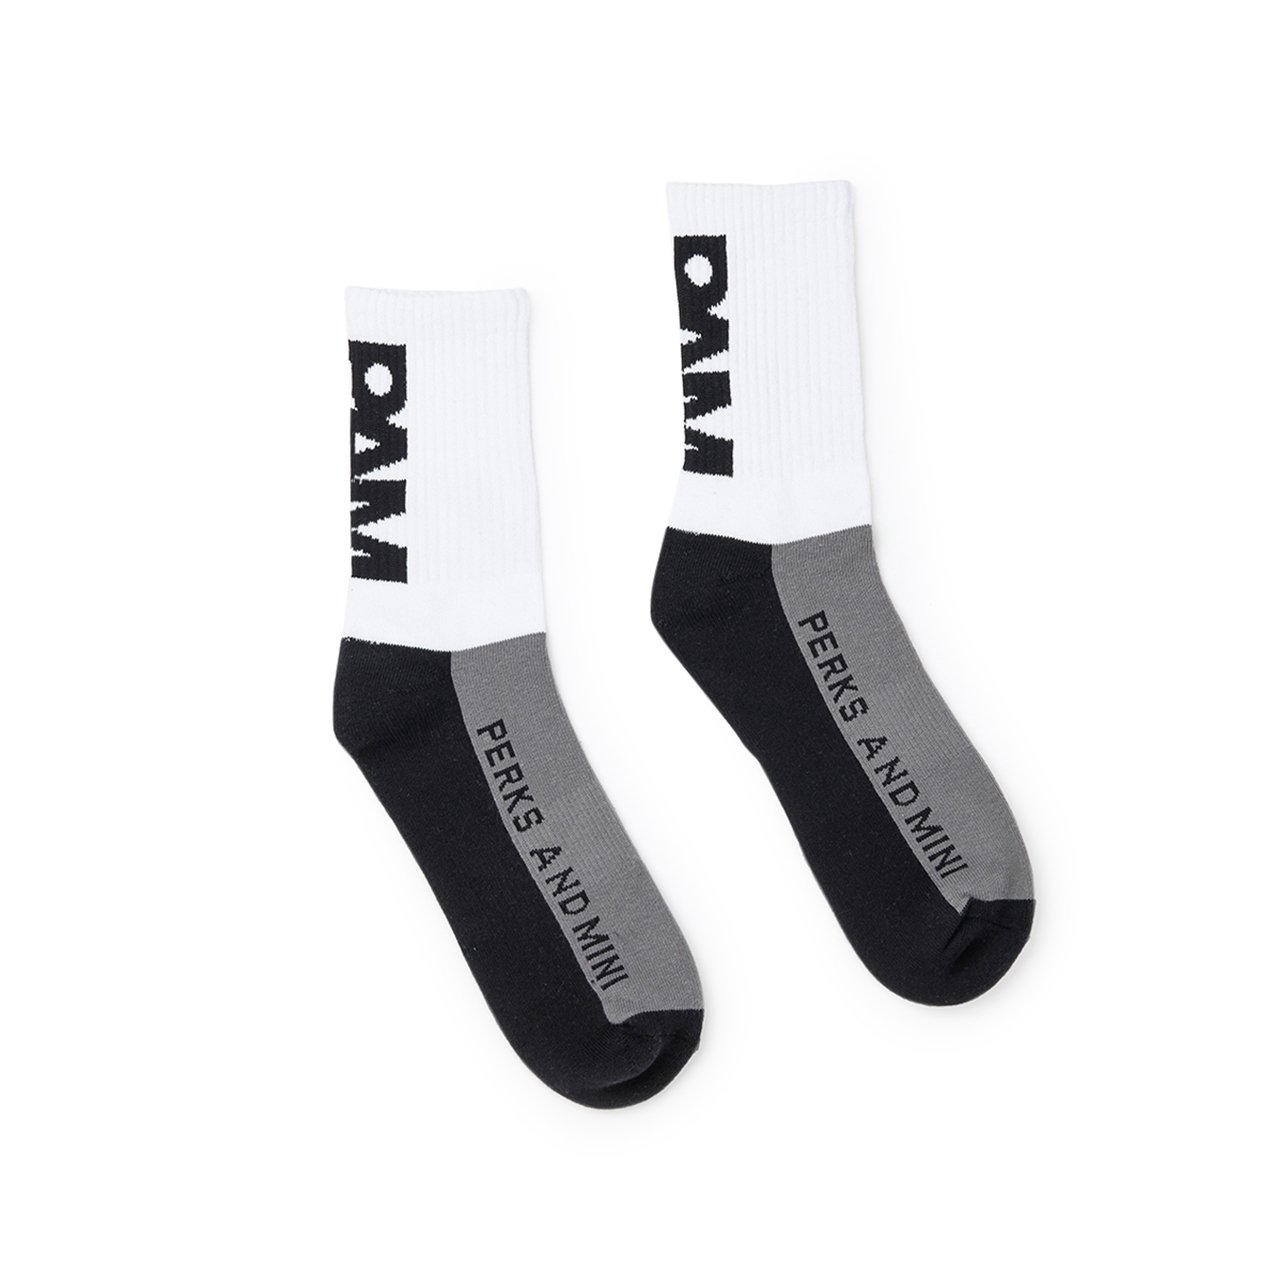 perks and mini x-perience sport socks (black / white) - 9743-bw - a.plus - Image - 1